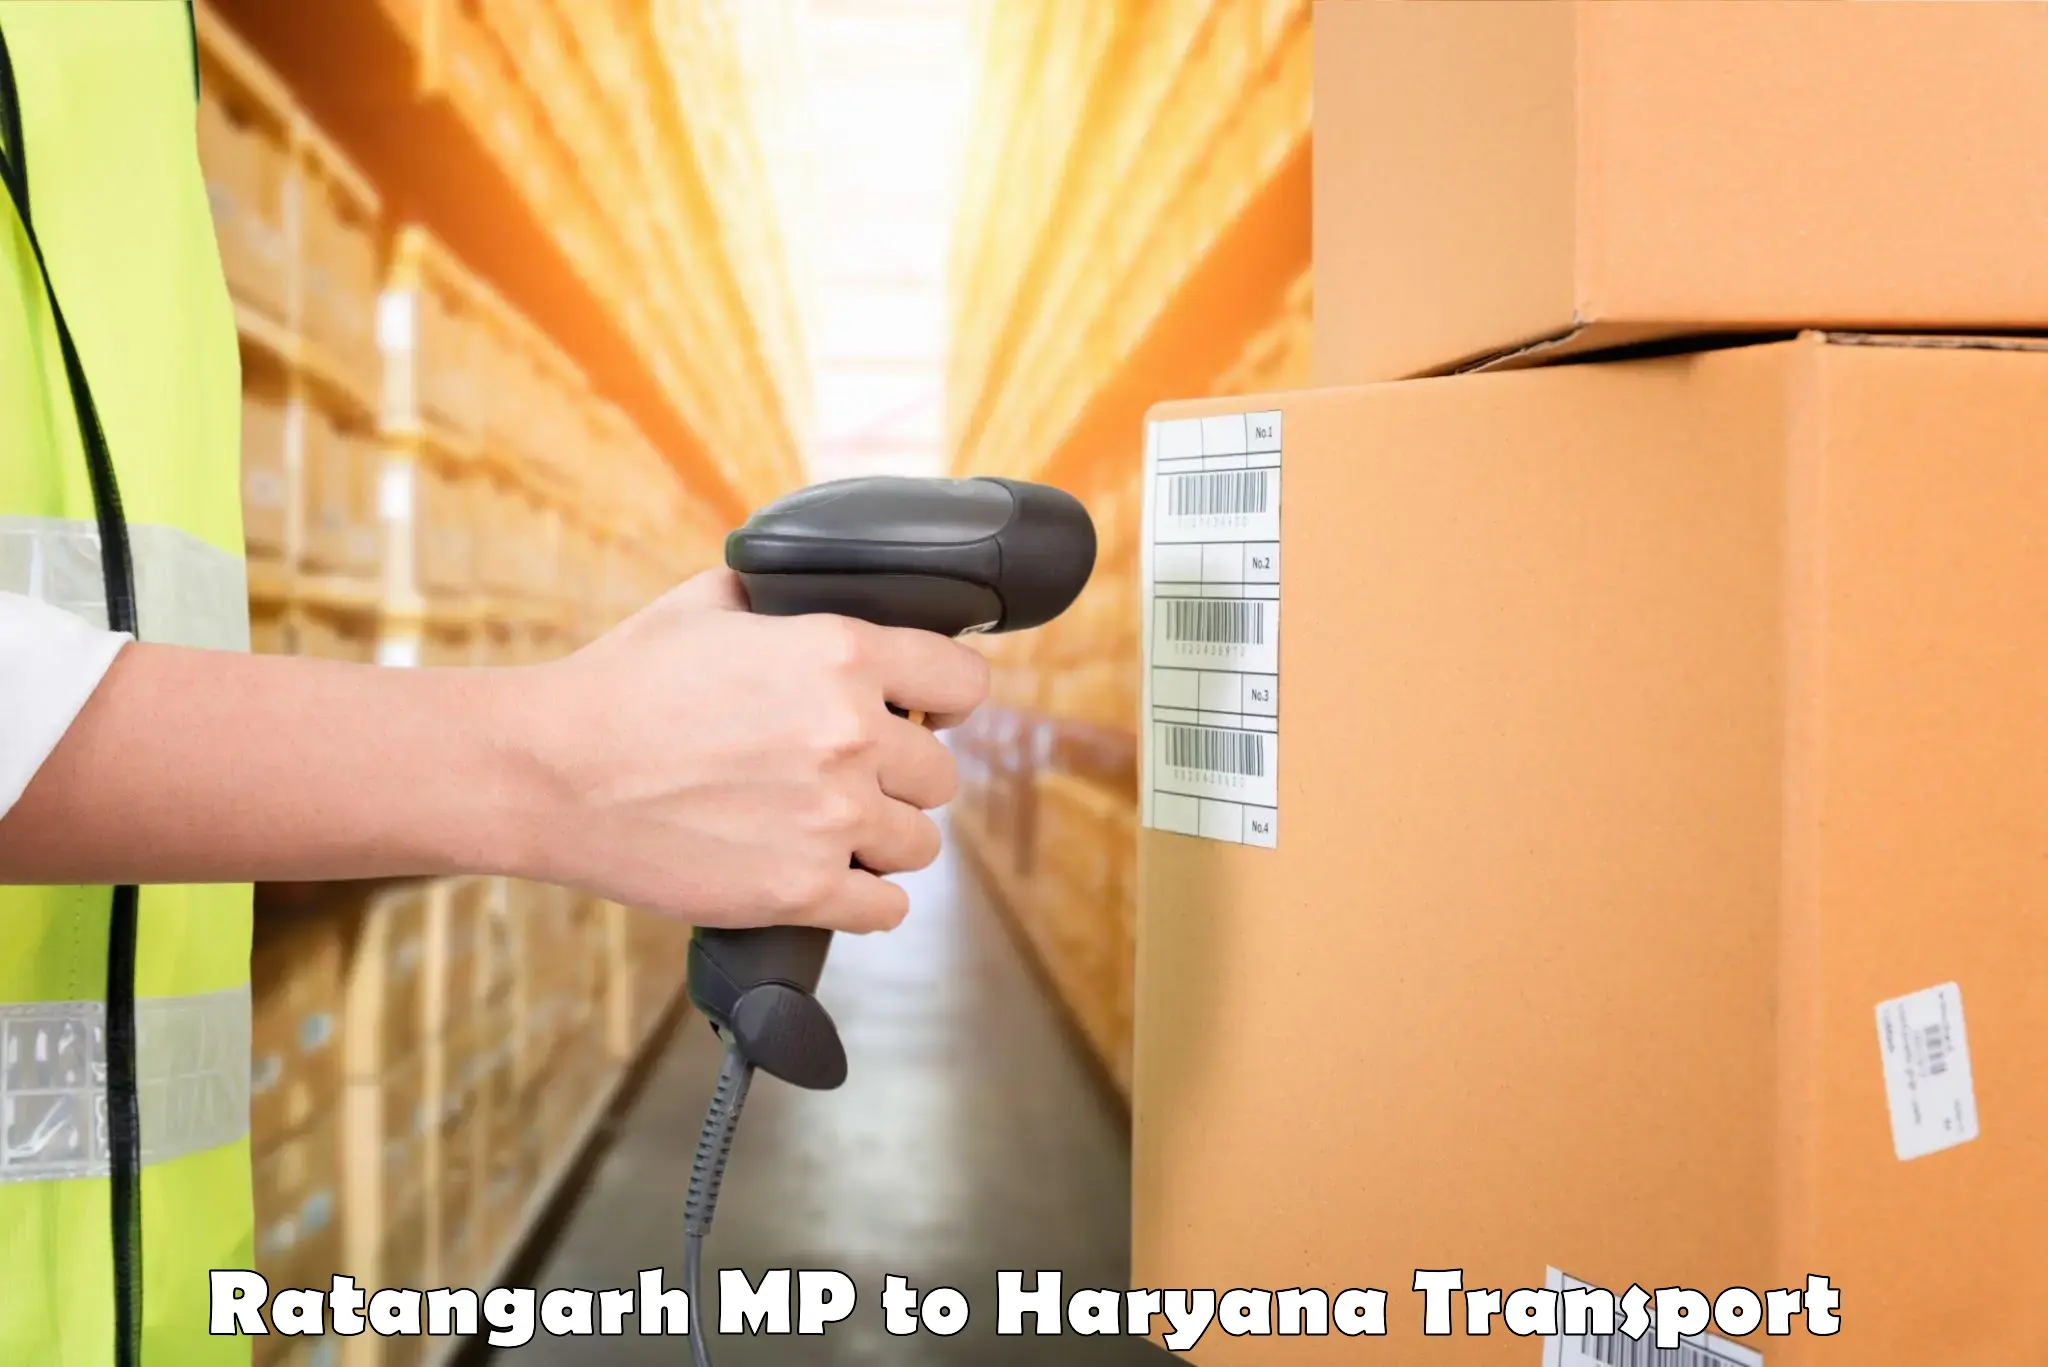 Nearest transport service Ratangarh MP to Ellenabad